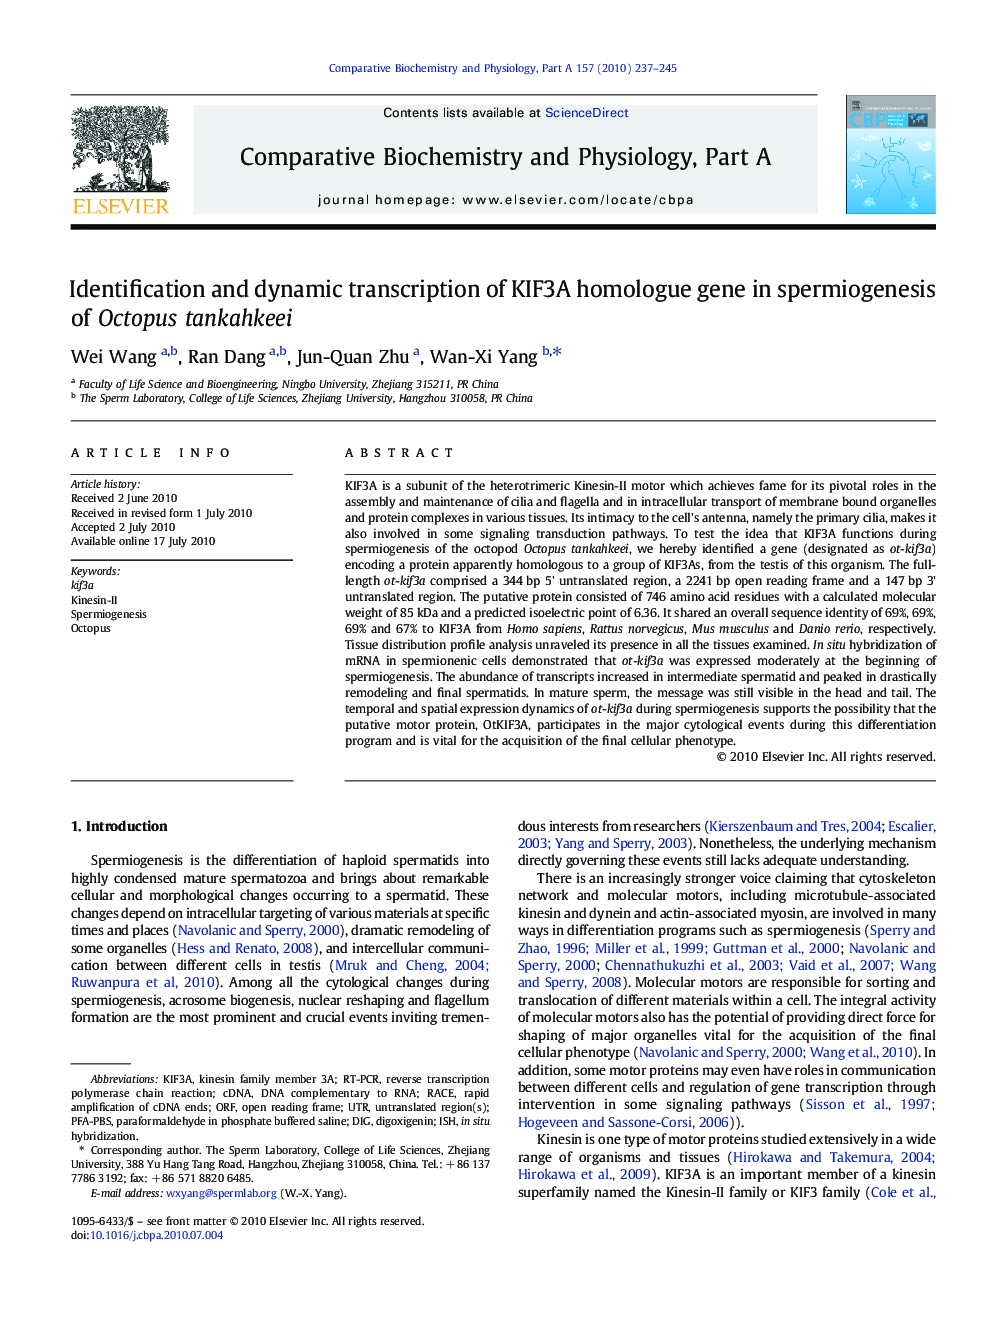 Identification and dynamic transcription of KIF3A homologue gene in spermiogenesis of Octopus tankahkeei